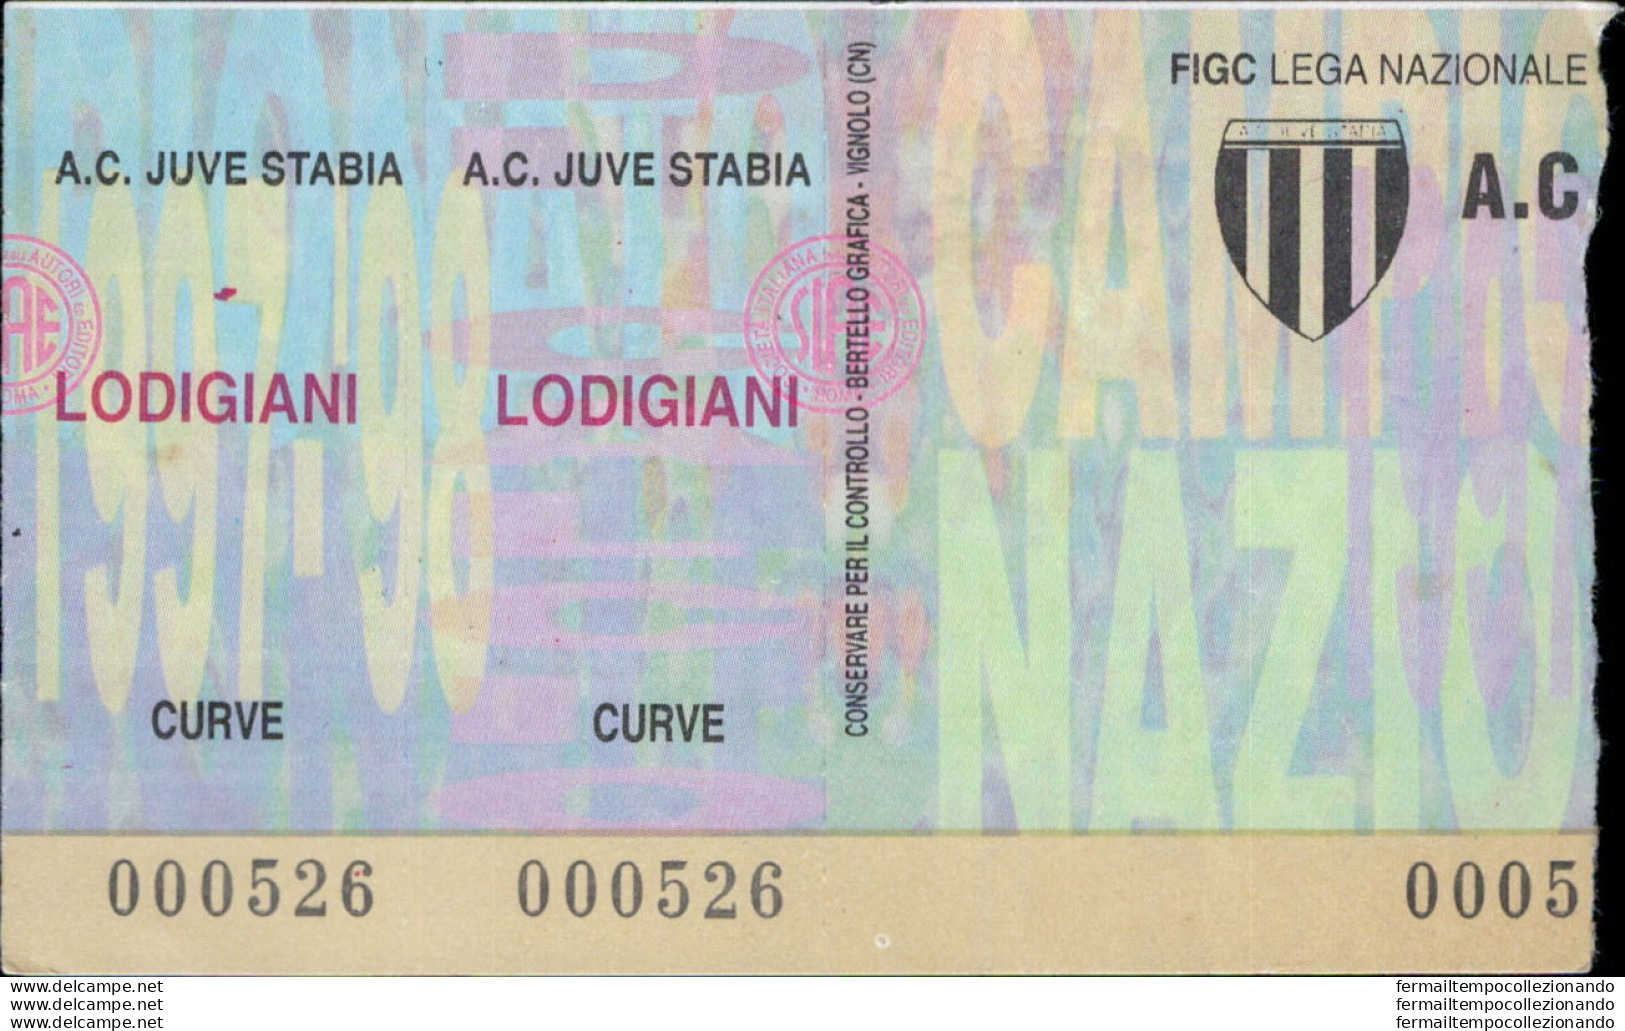 Bl76 Biglietto Calcio Ticket Juve Stabia - Lodigiani - Tickets - Vouchers